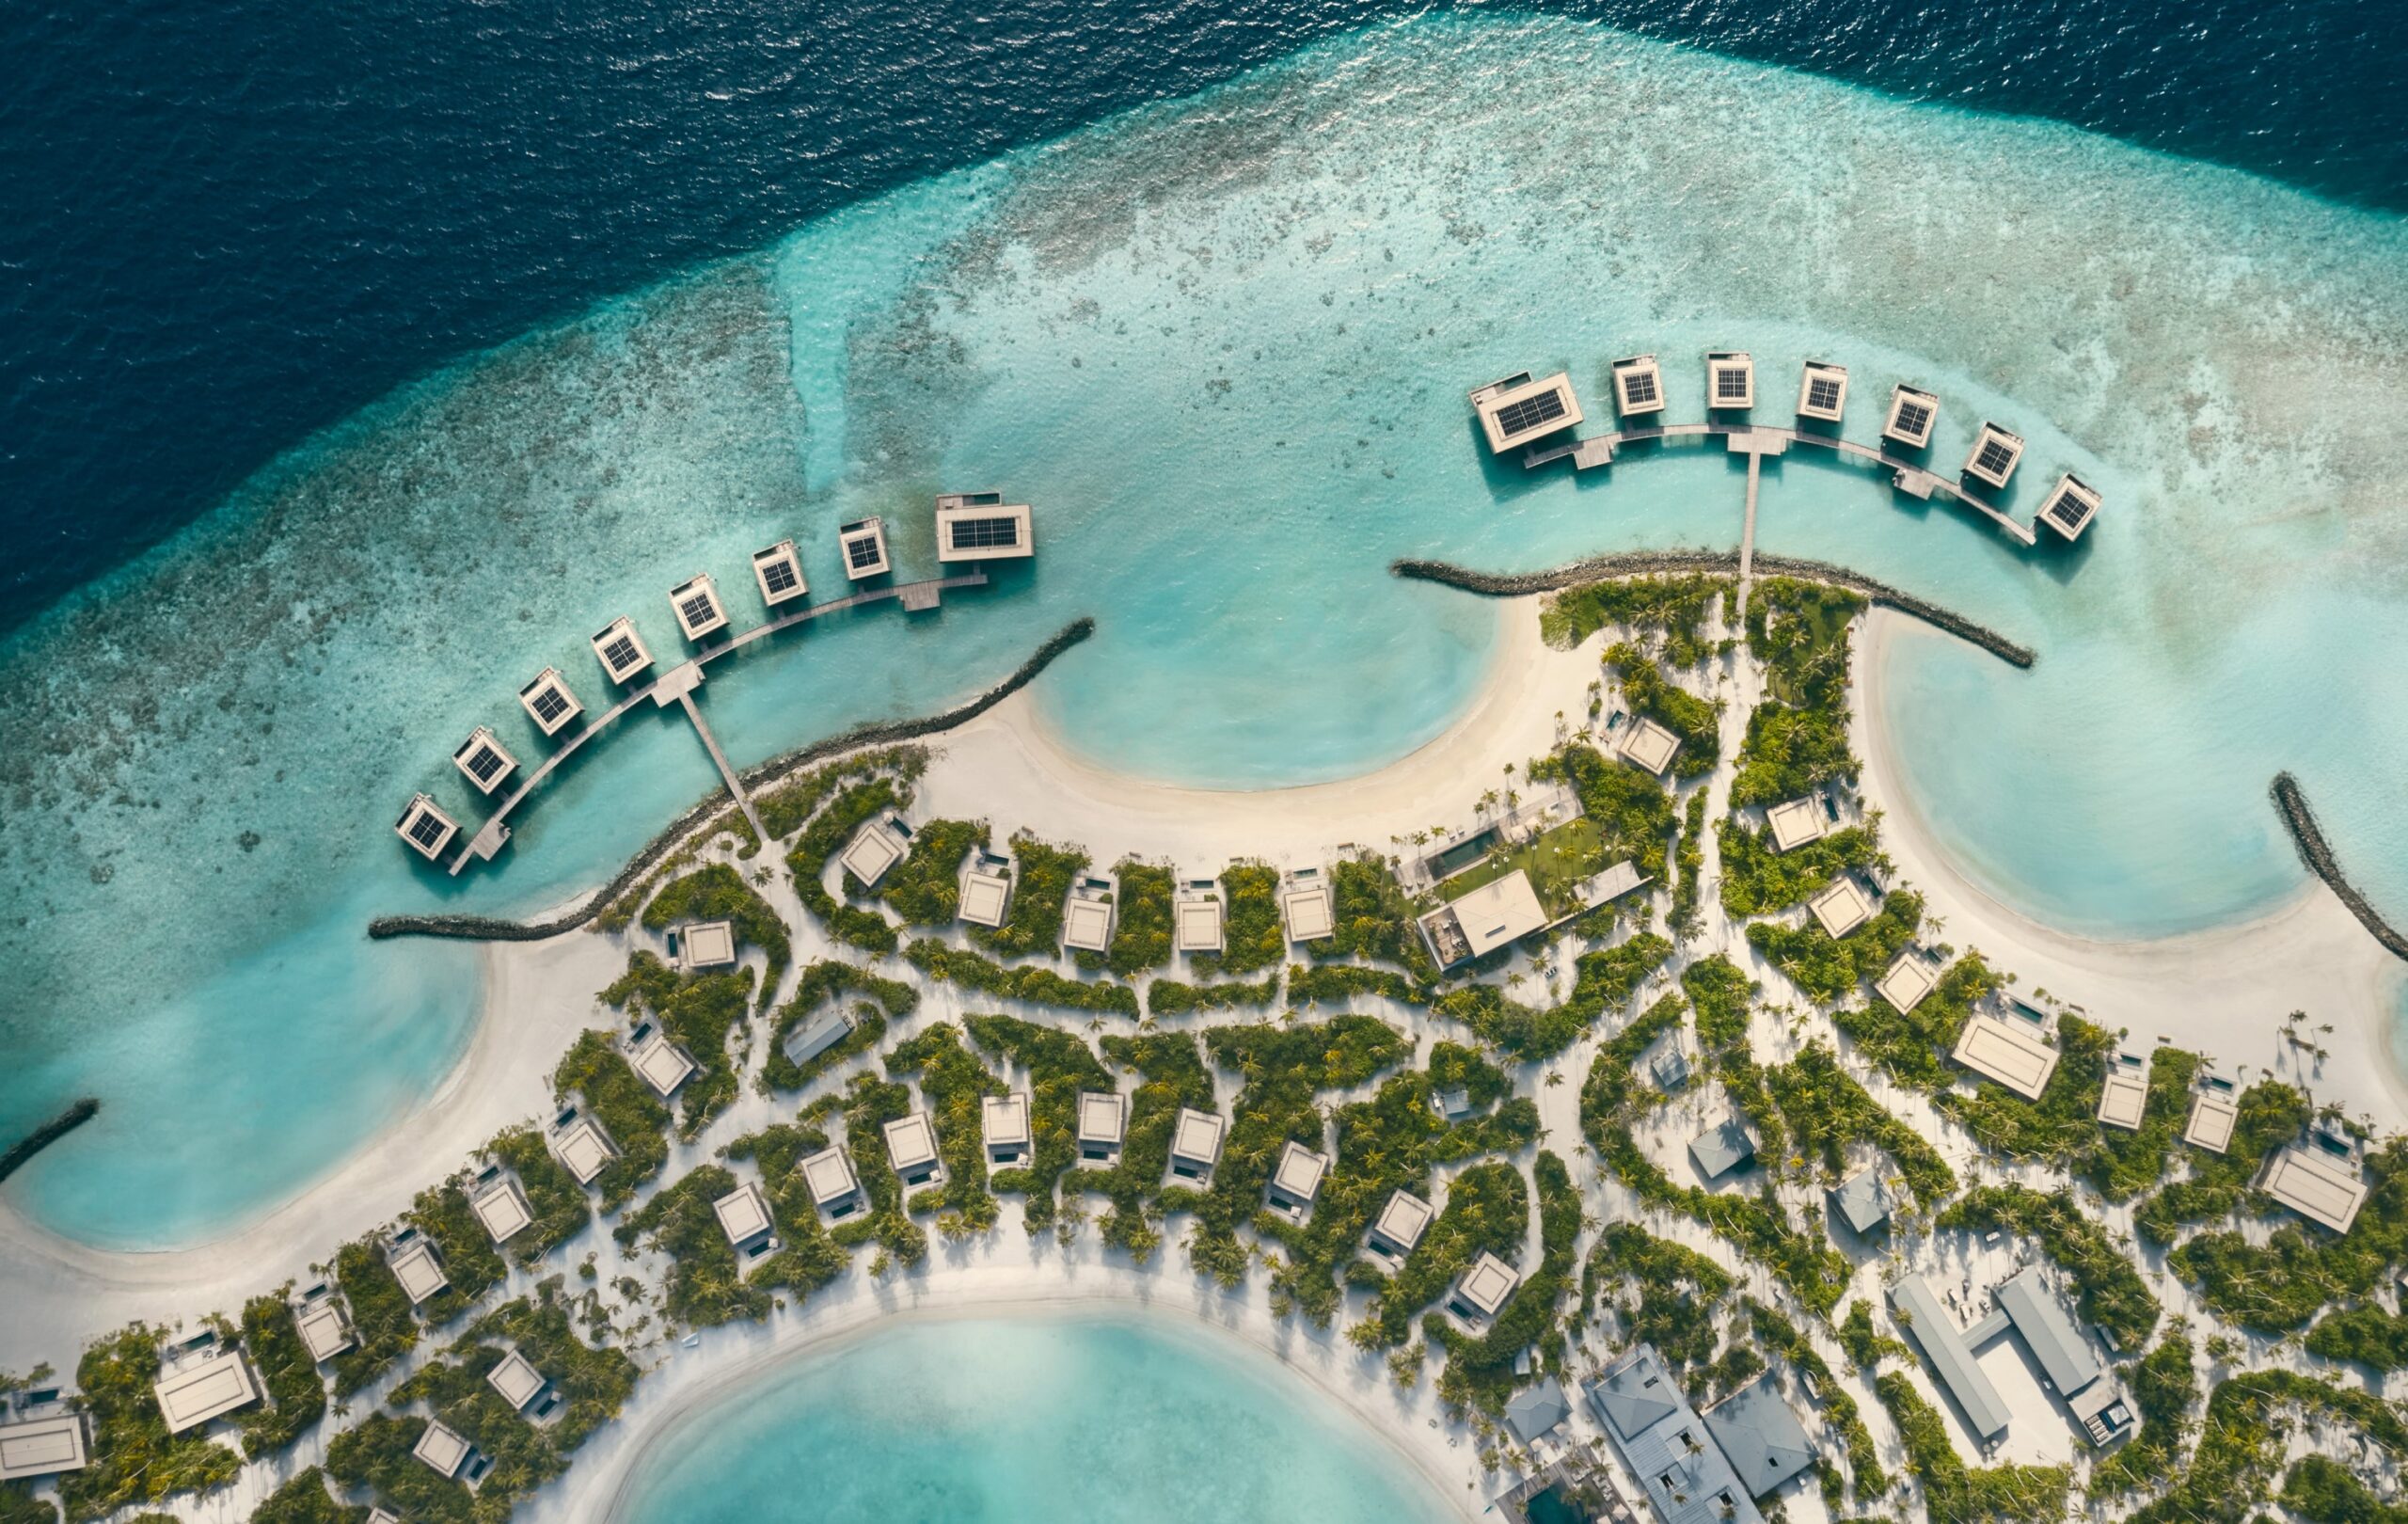 View from the sky of Patina Maldives, Fari Islands